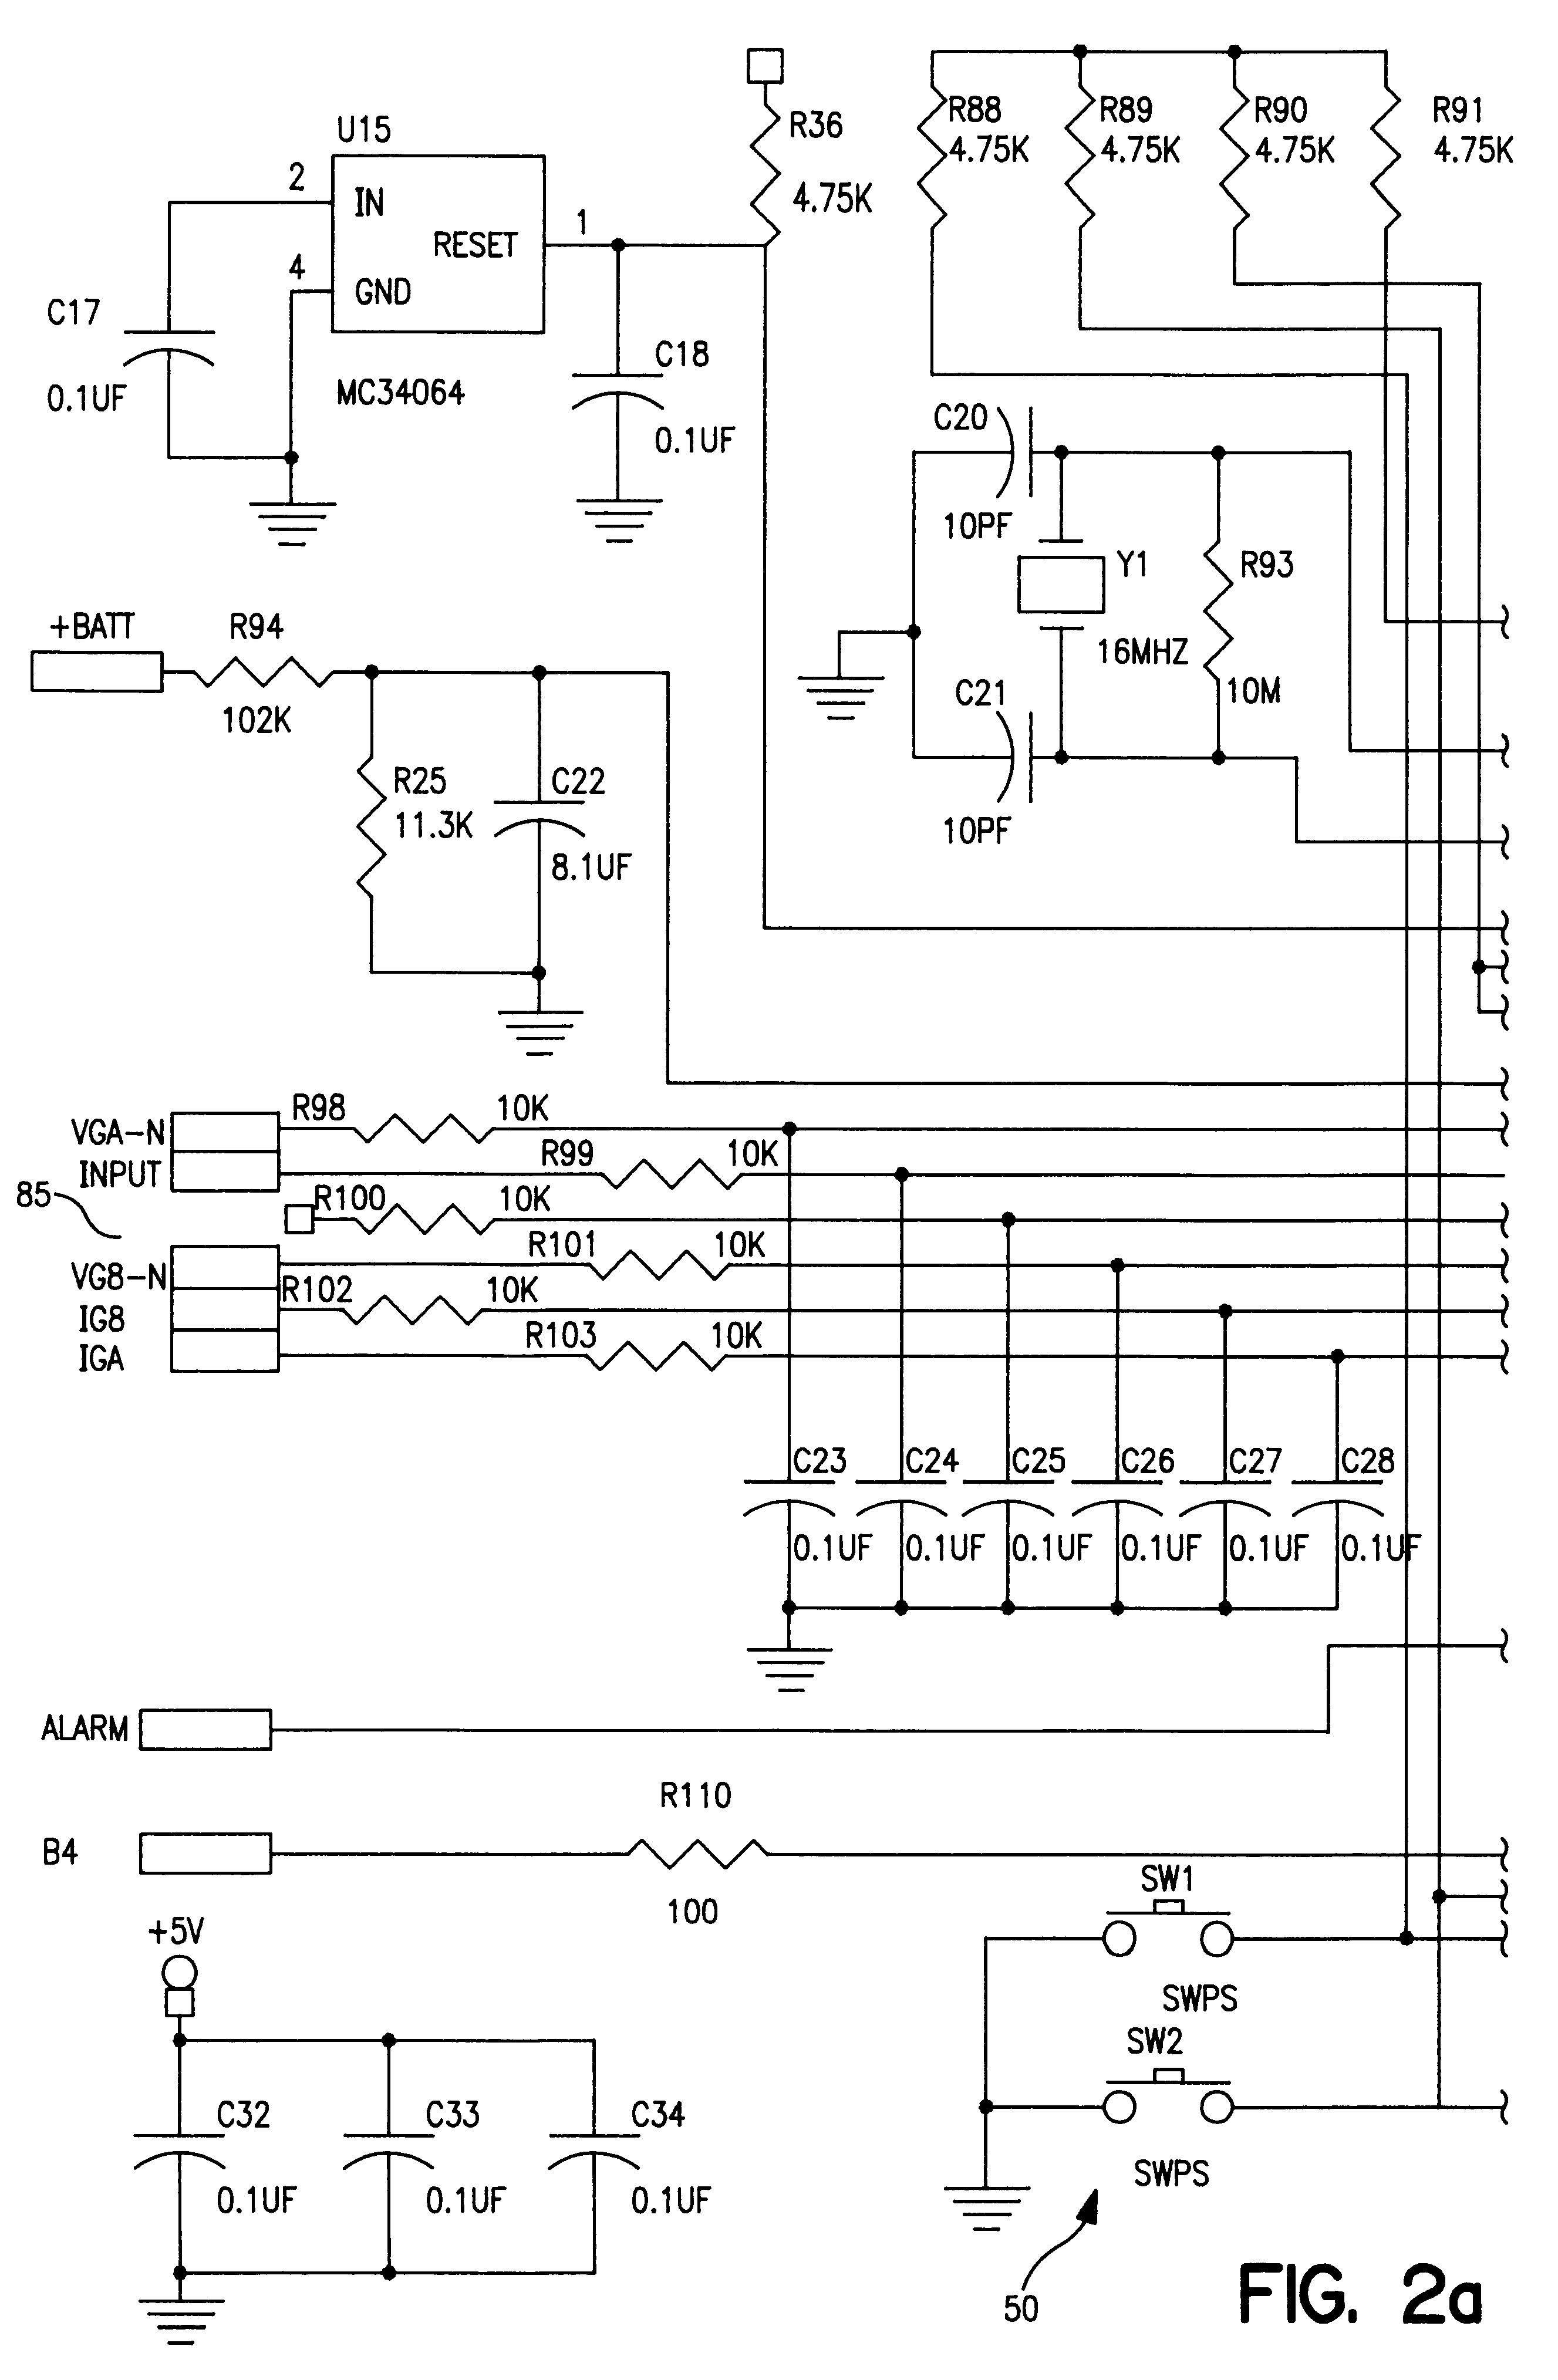 Manual Generator Transfer Switch Wiring Diagram Generac Transfer Switch Wiring Diagram Gif Throughout Generator